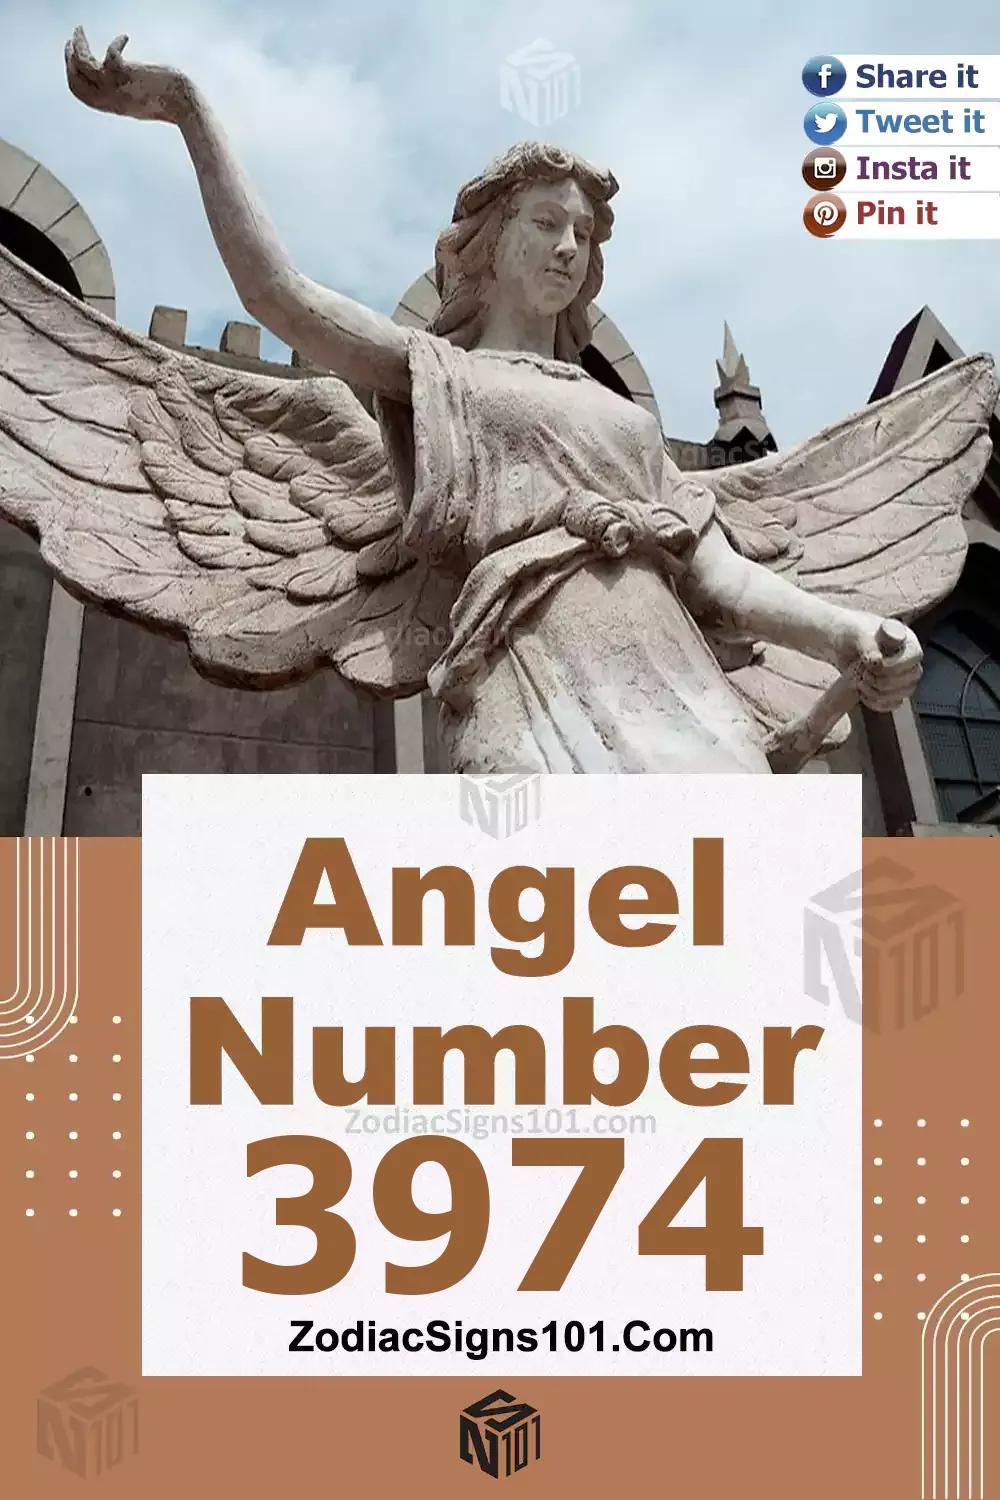 3974-Angel-Number-Meaning.jpg